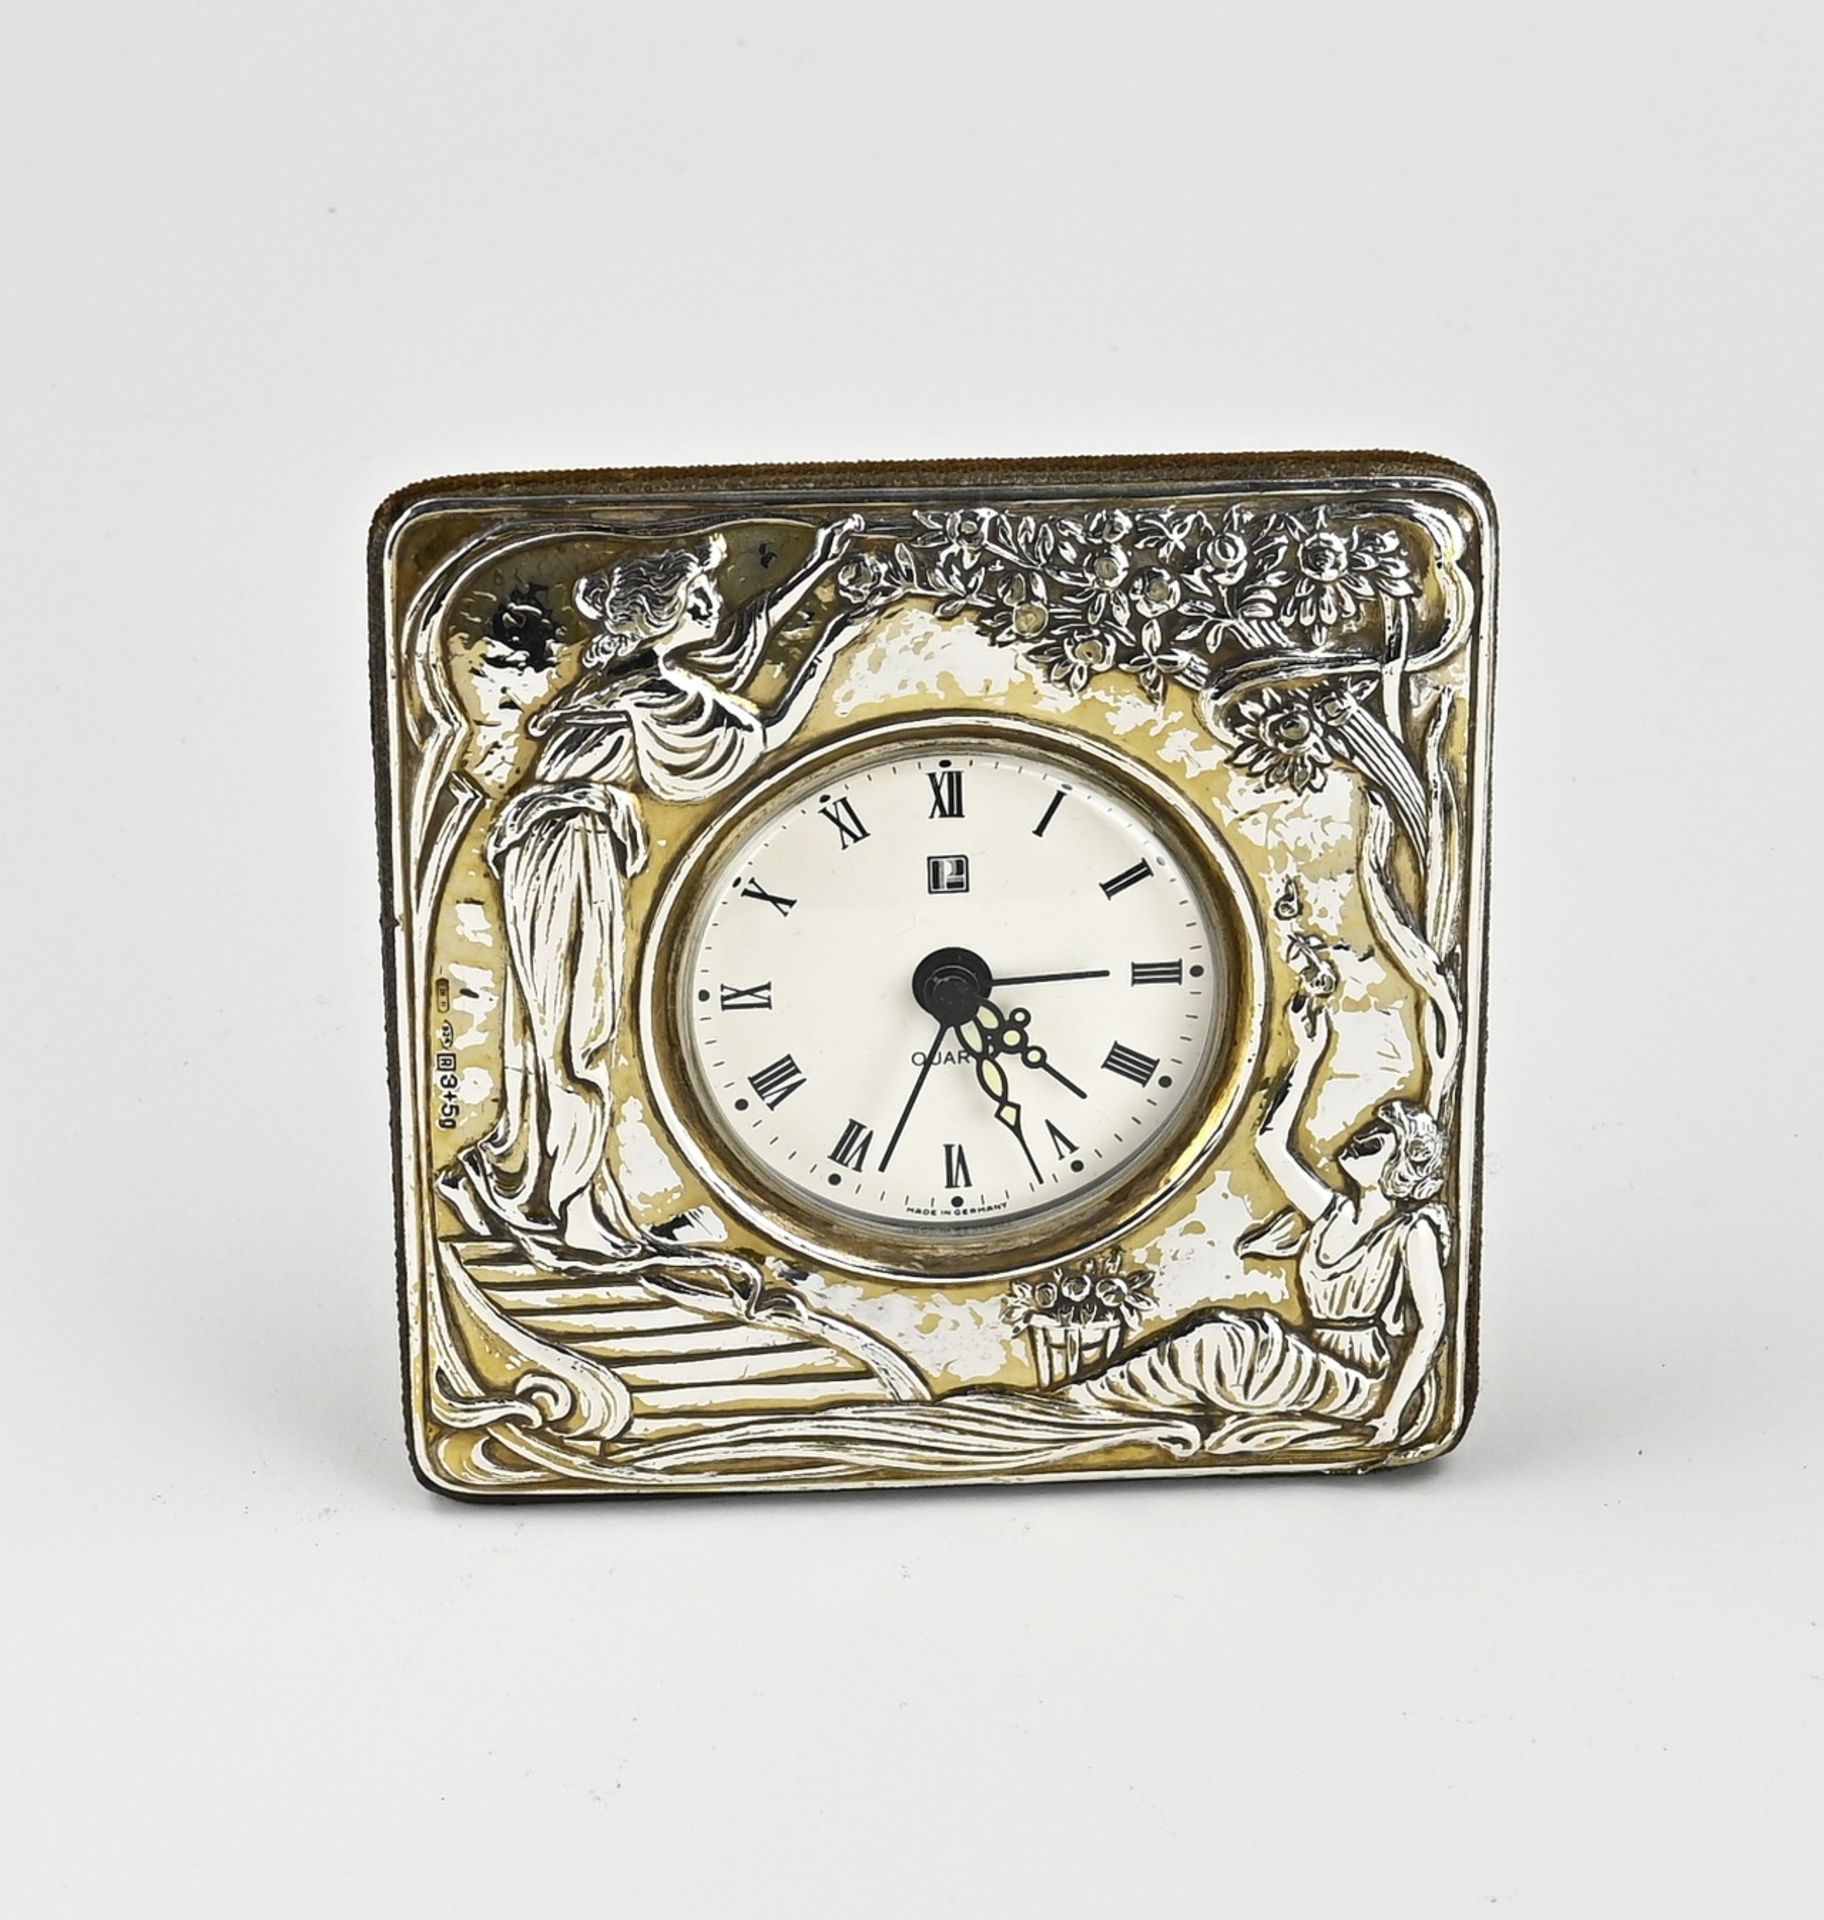 Clock with silver, Art Nouveau style